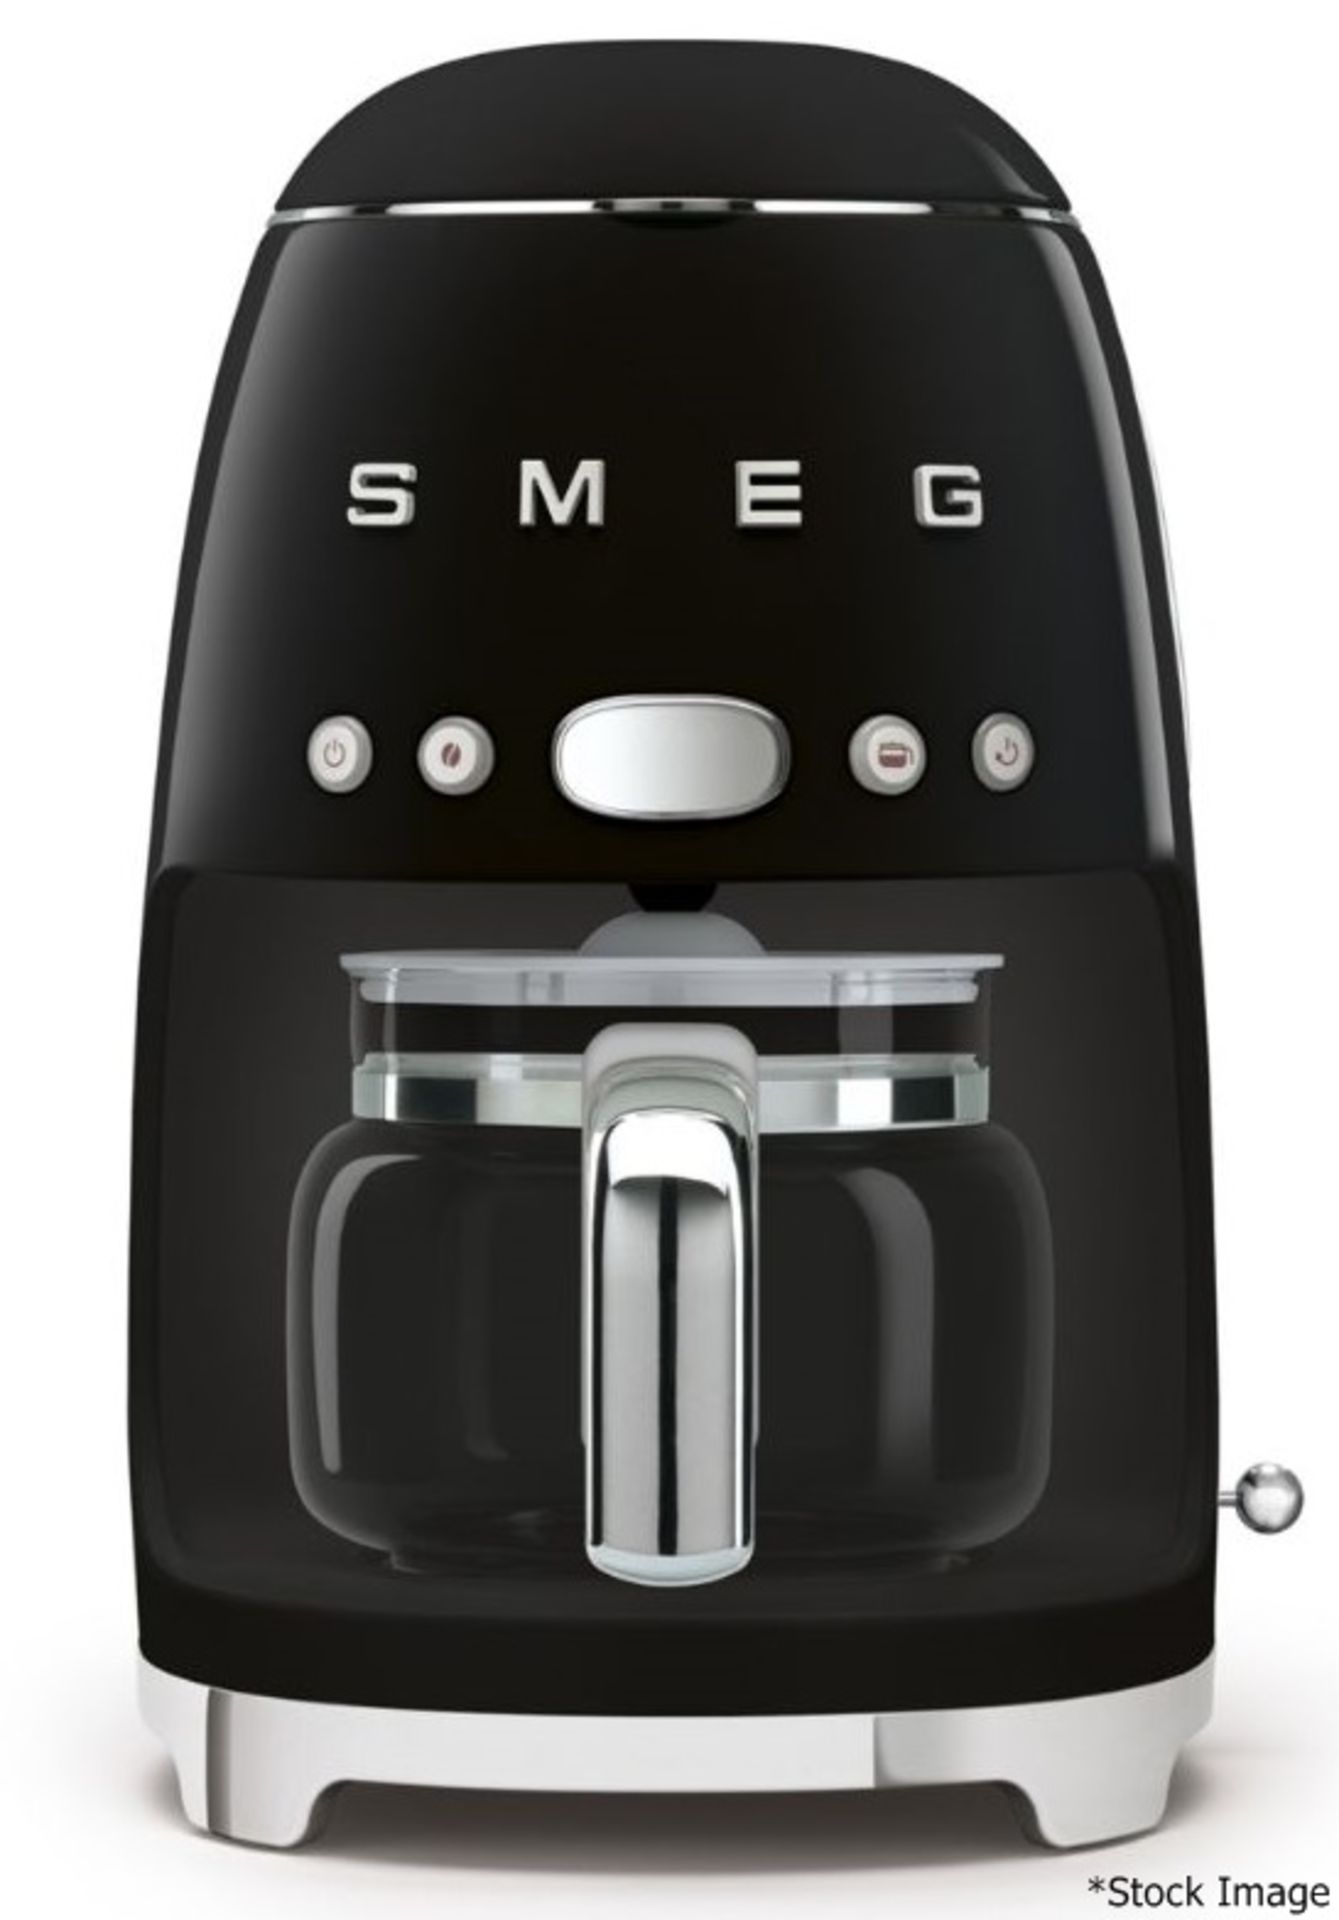 1 x SMEG Drip Filter Coffee Machine - Original Price £199.00 - Boxed Ex-display Item - Ref: HAS701/